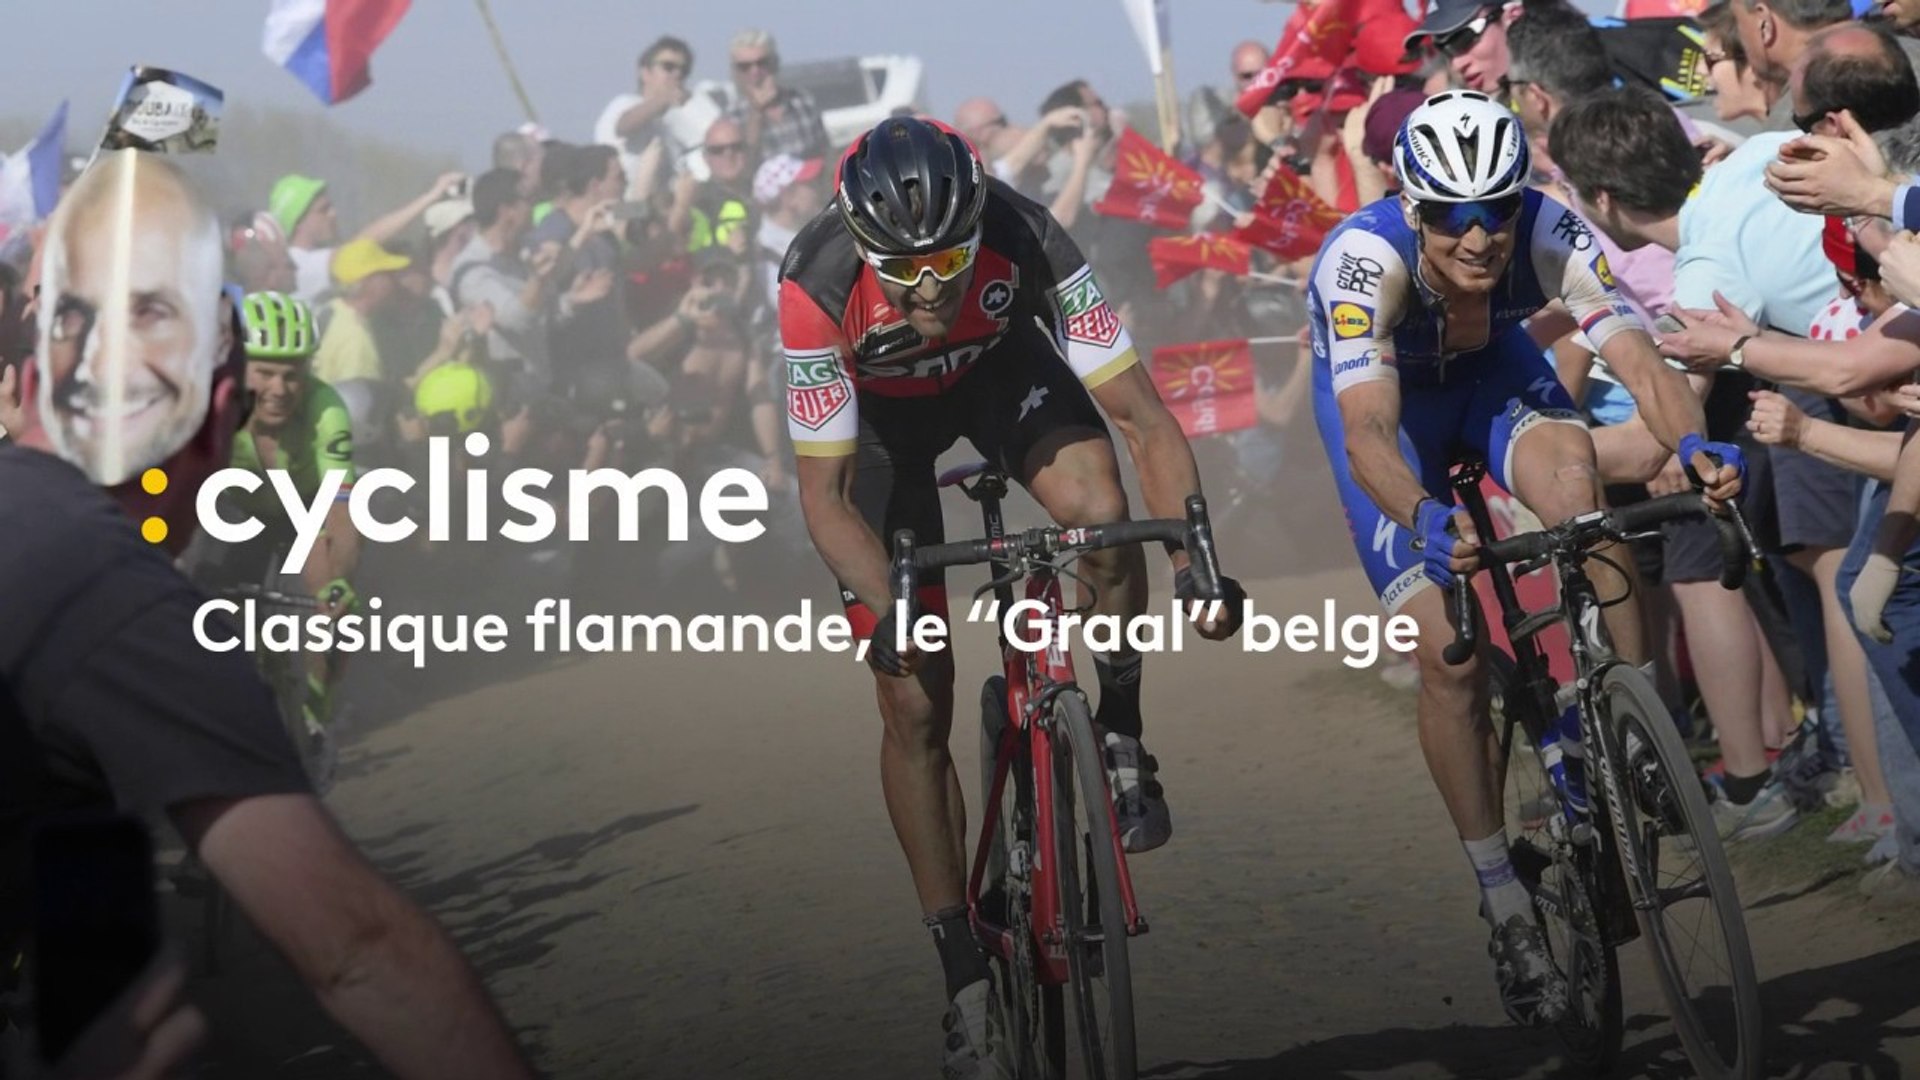 Cyclisme : Classique flamande, le “Graal” belge - Vidéo Dailymotion